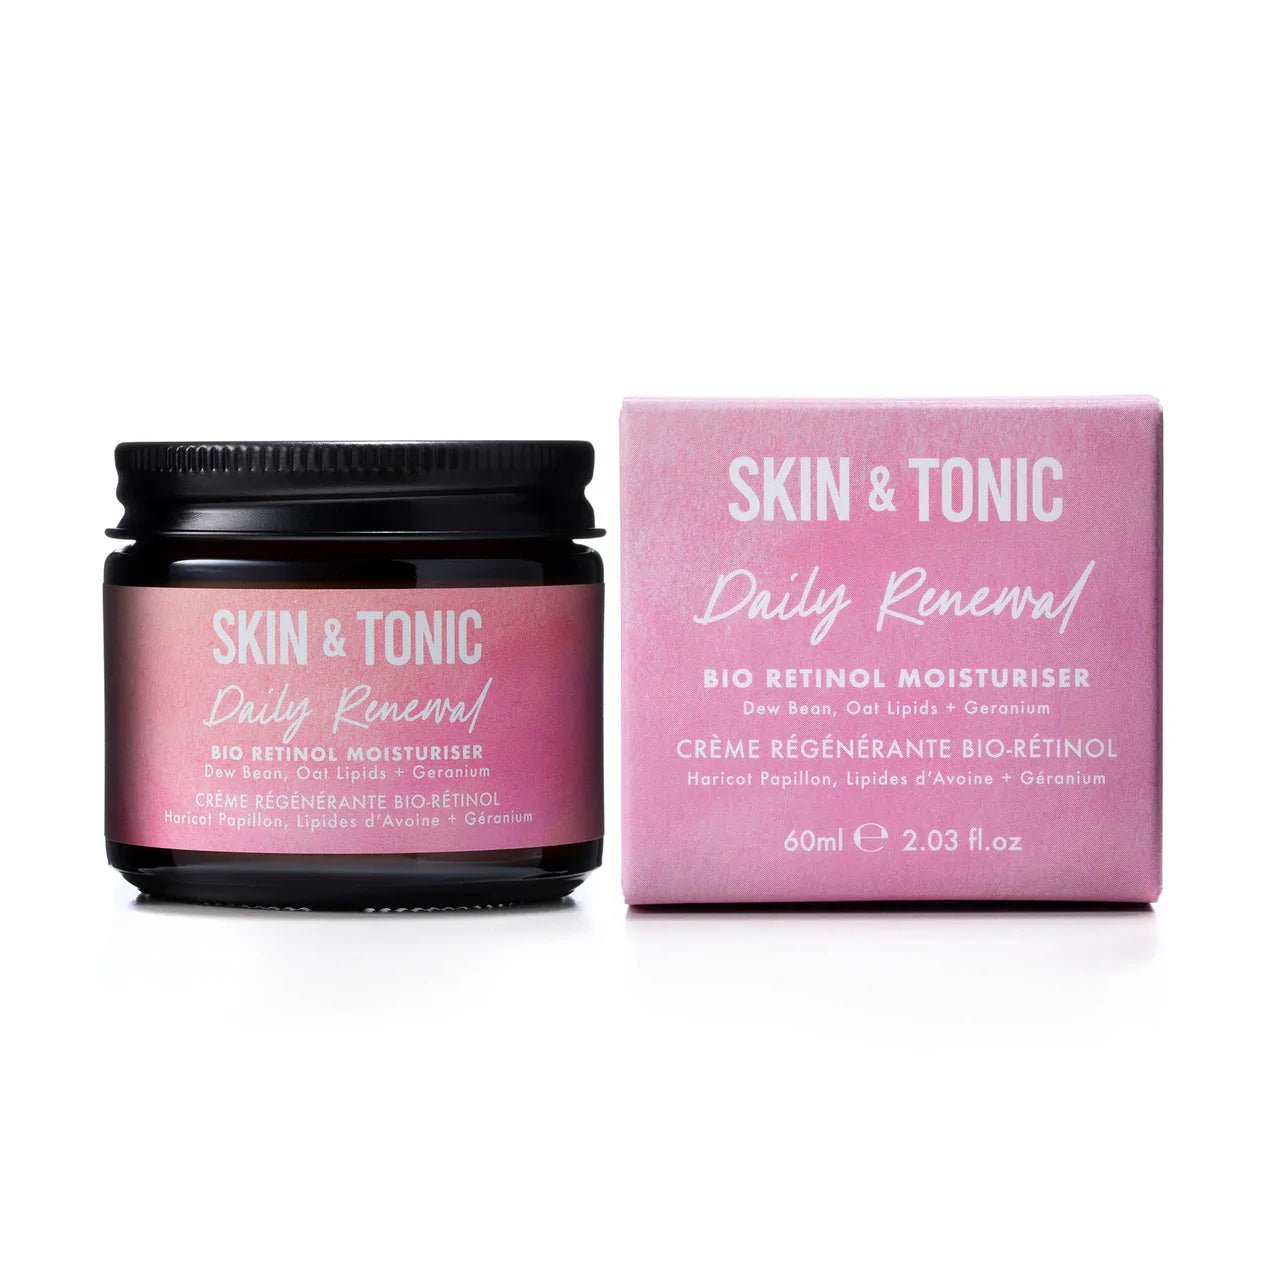 Skin & Tonic Skin & Tonic Daily renewal Bio Retinol moisturizer kosteusvoide, 60 ml.